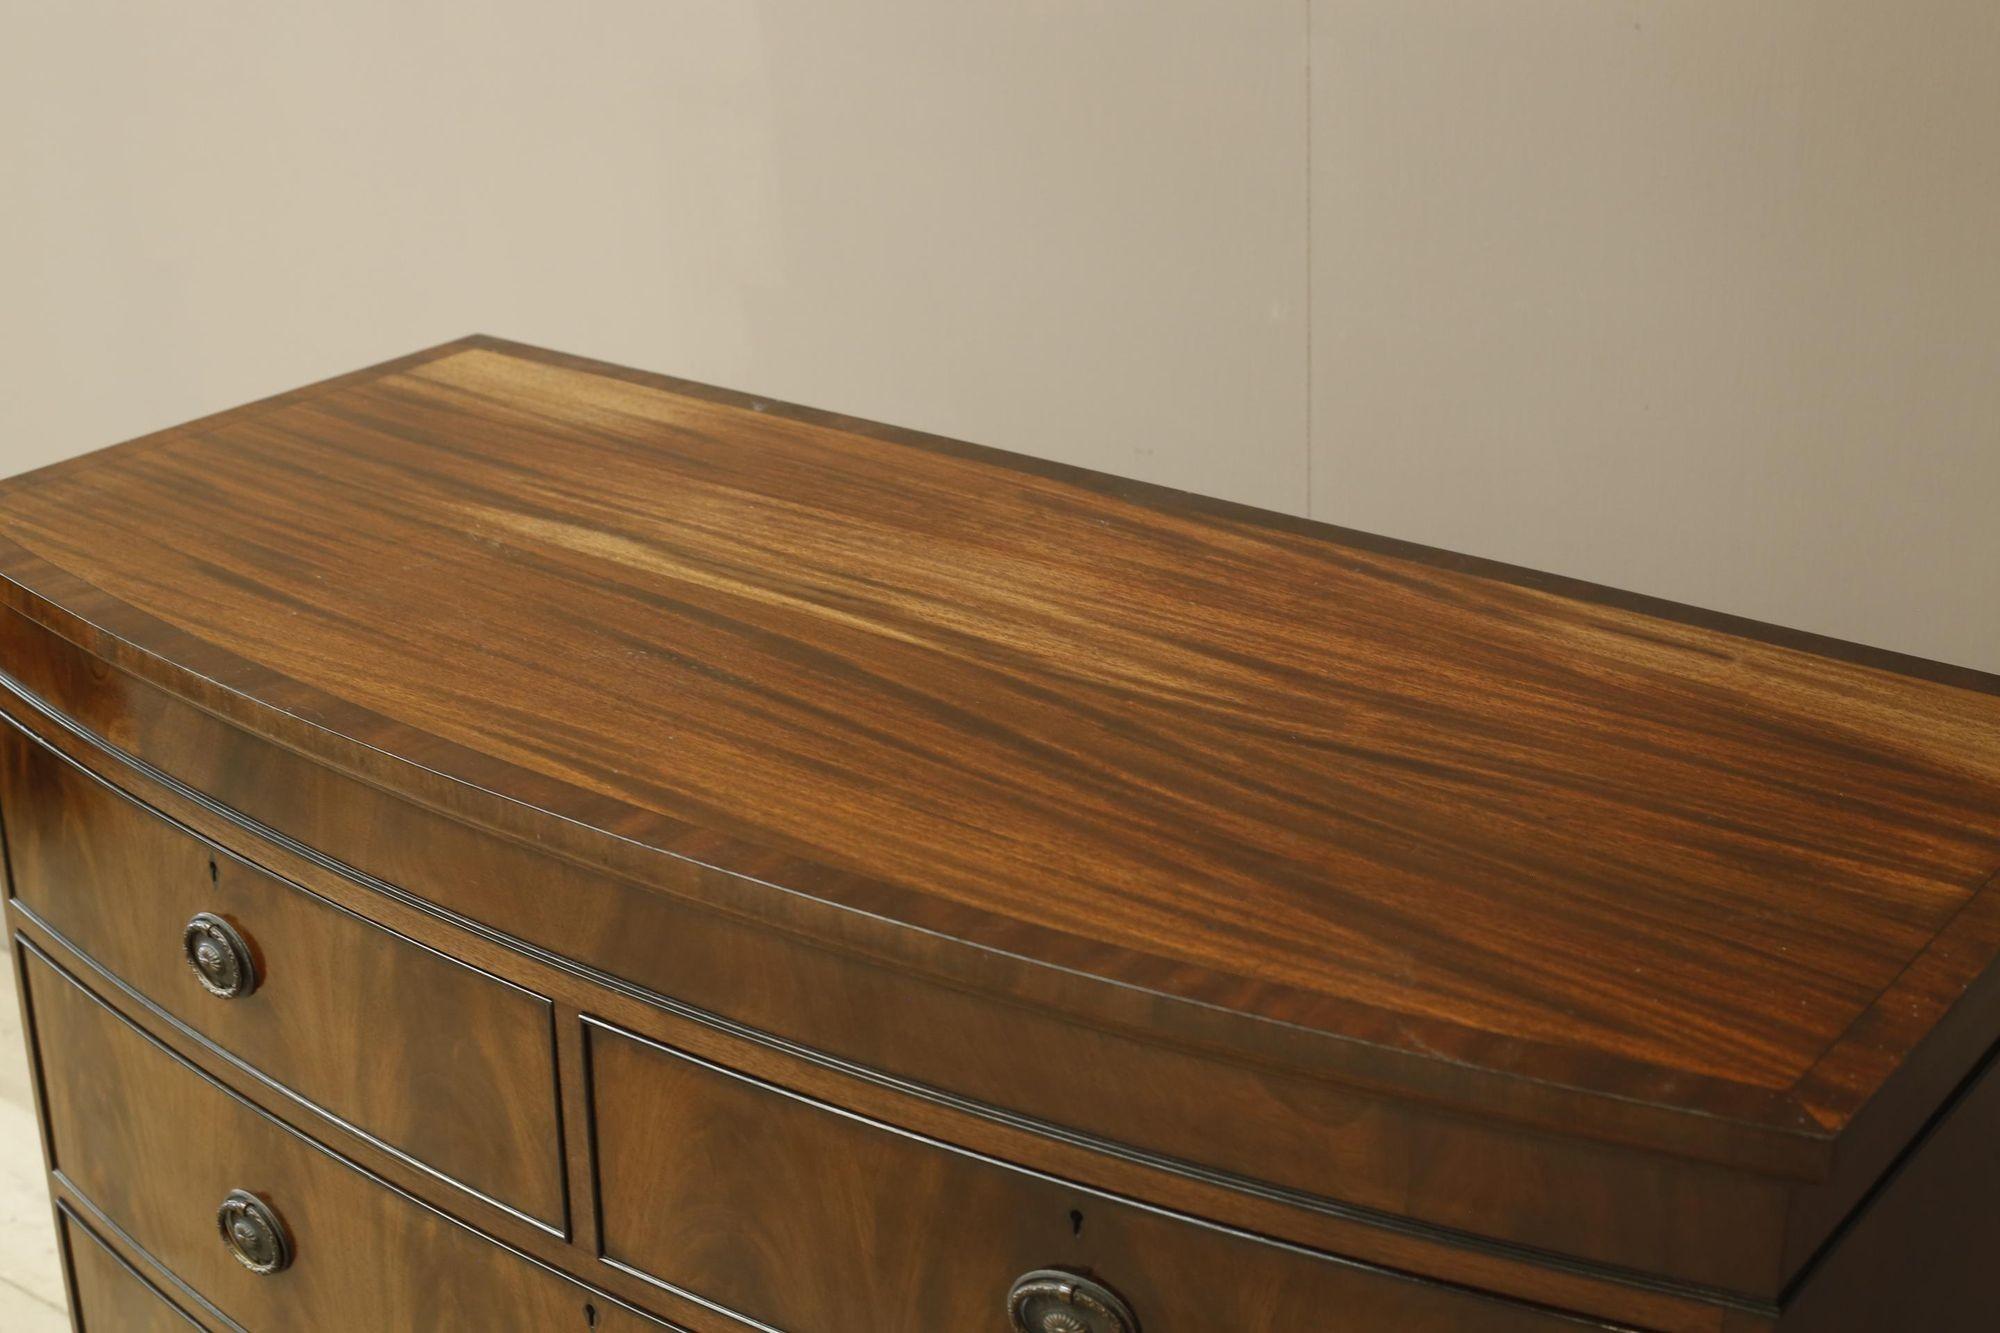 20th Century Edwardian flame mahogany chest of drawers by Marsh, Jones & Cribb